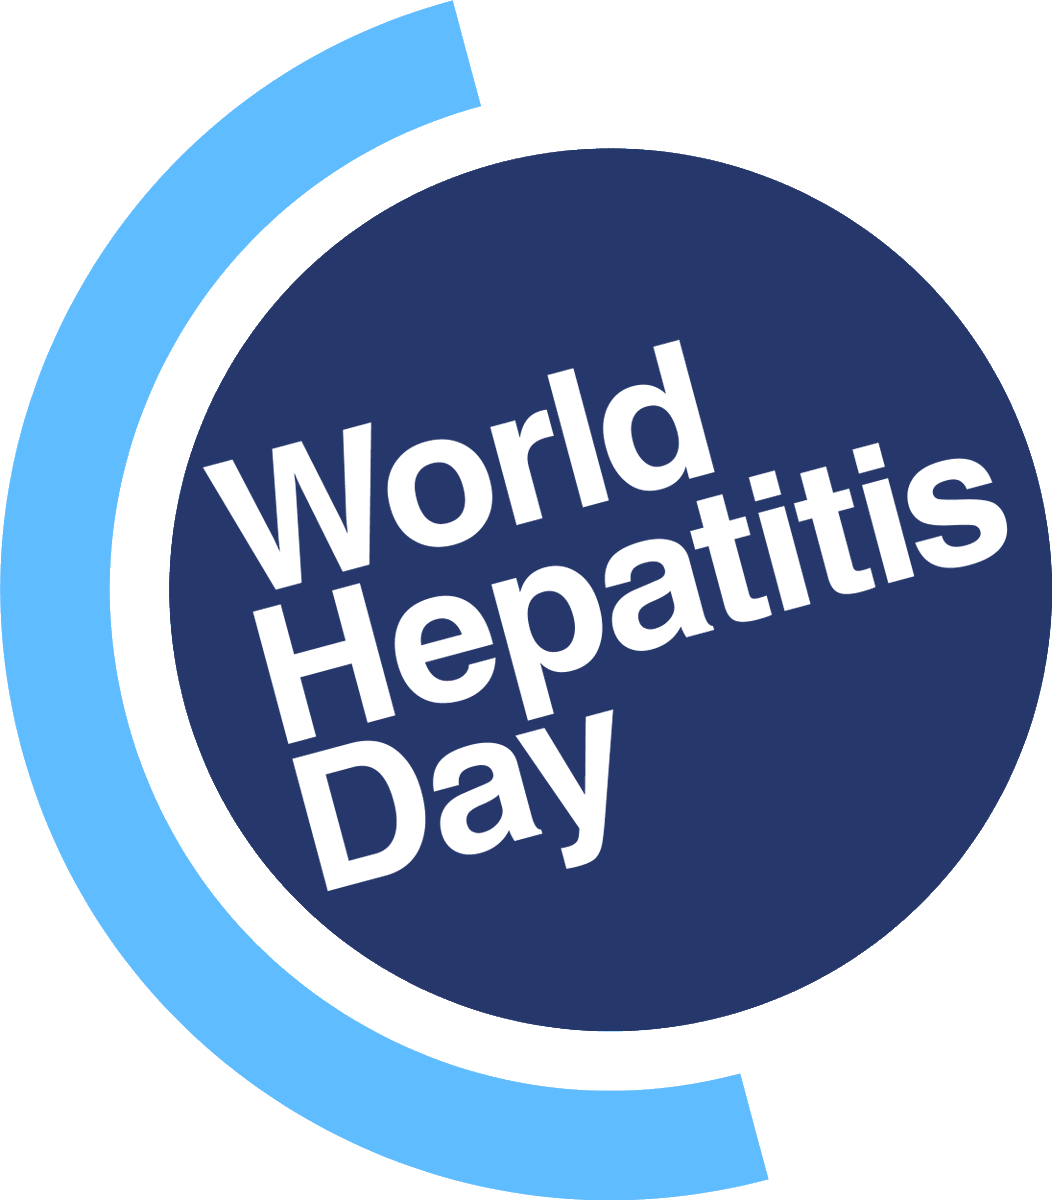 ChelanDouglasHD: July 28th is World Hepatitis Day! 

Viral hepatitis affe...